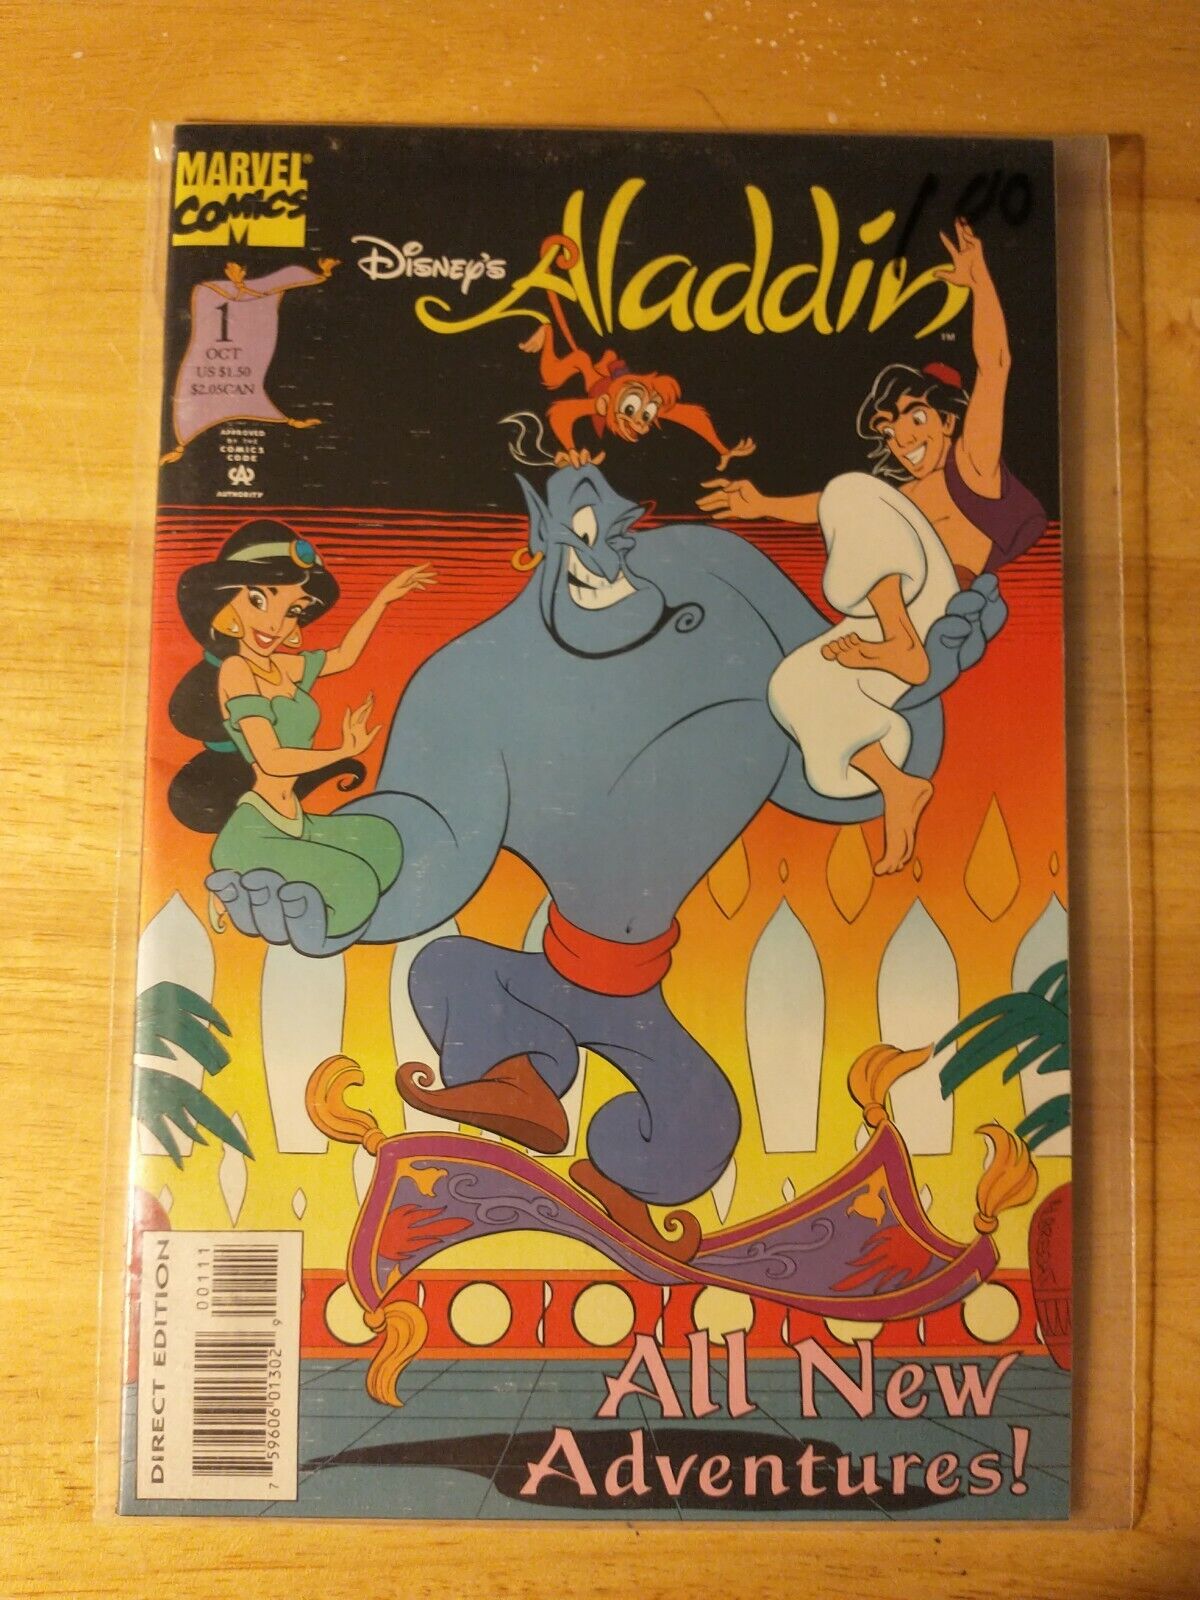 Disney's Aladdin #1 Marvel Comics Oct 1994 